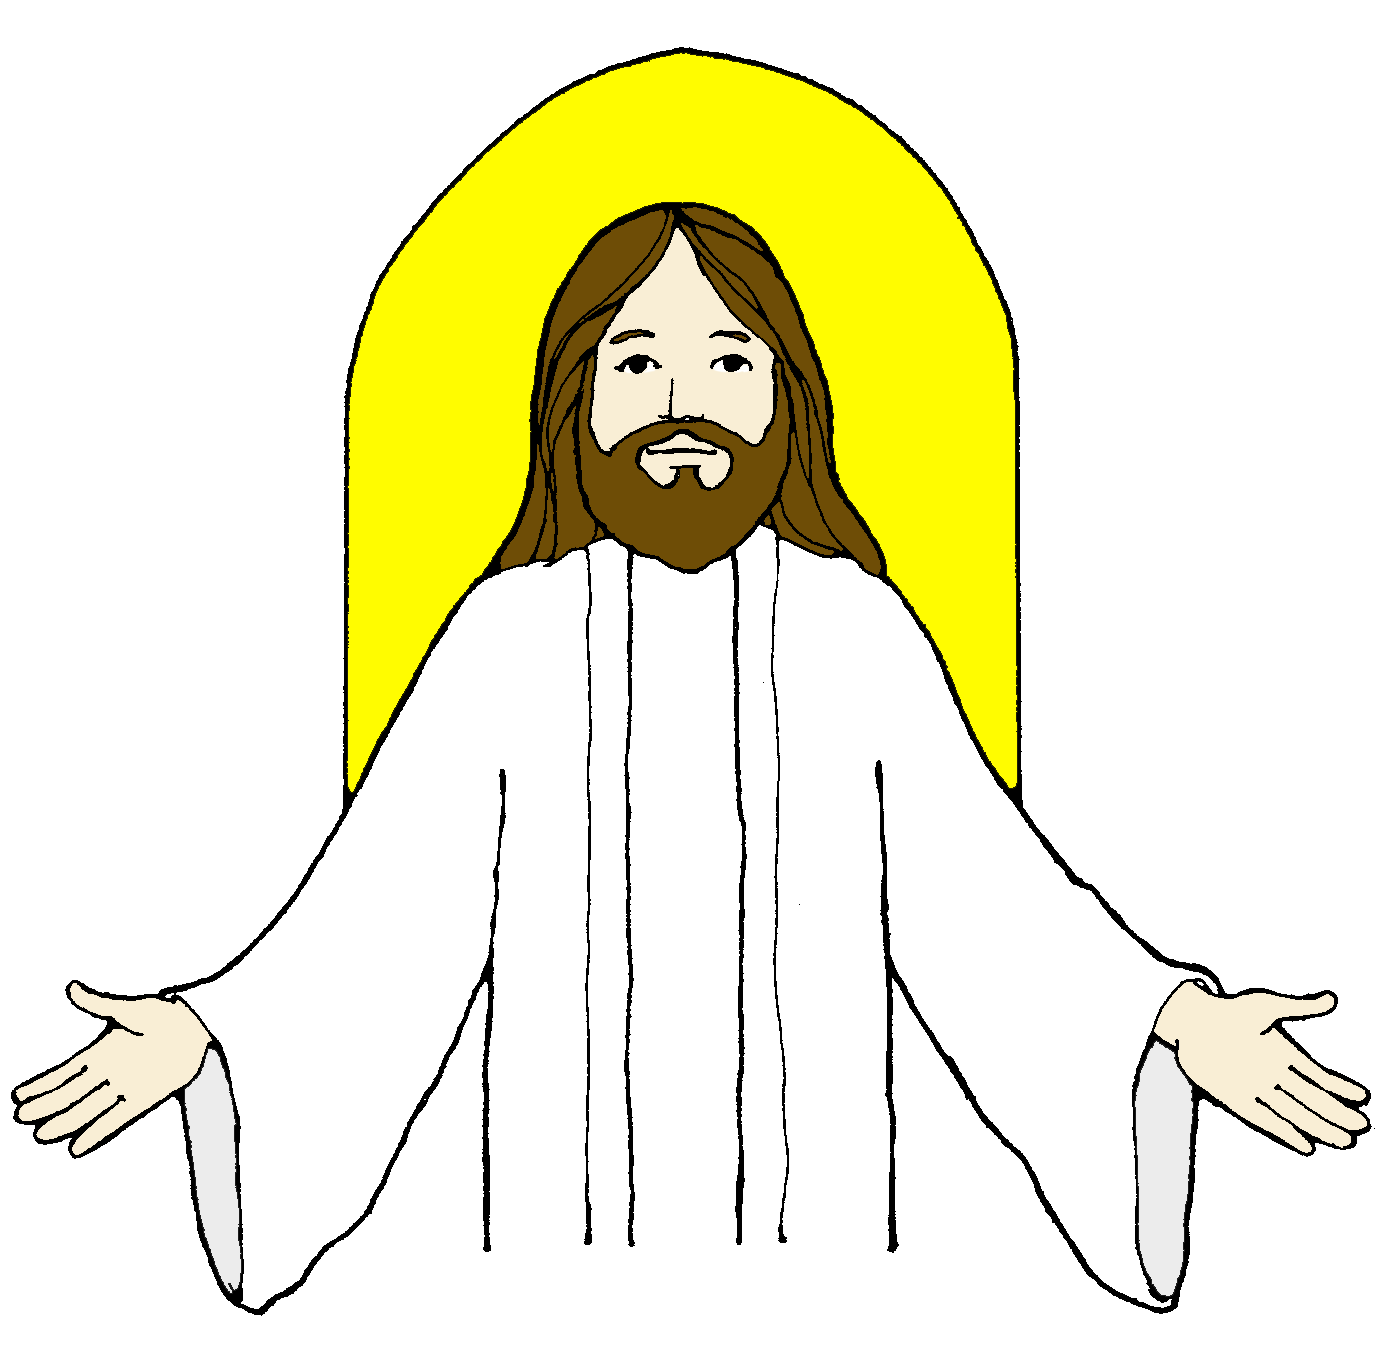 Clipart of jesus christ | ClipartMonk - Free Clip Art Images